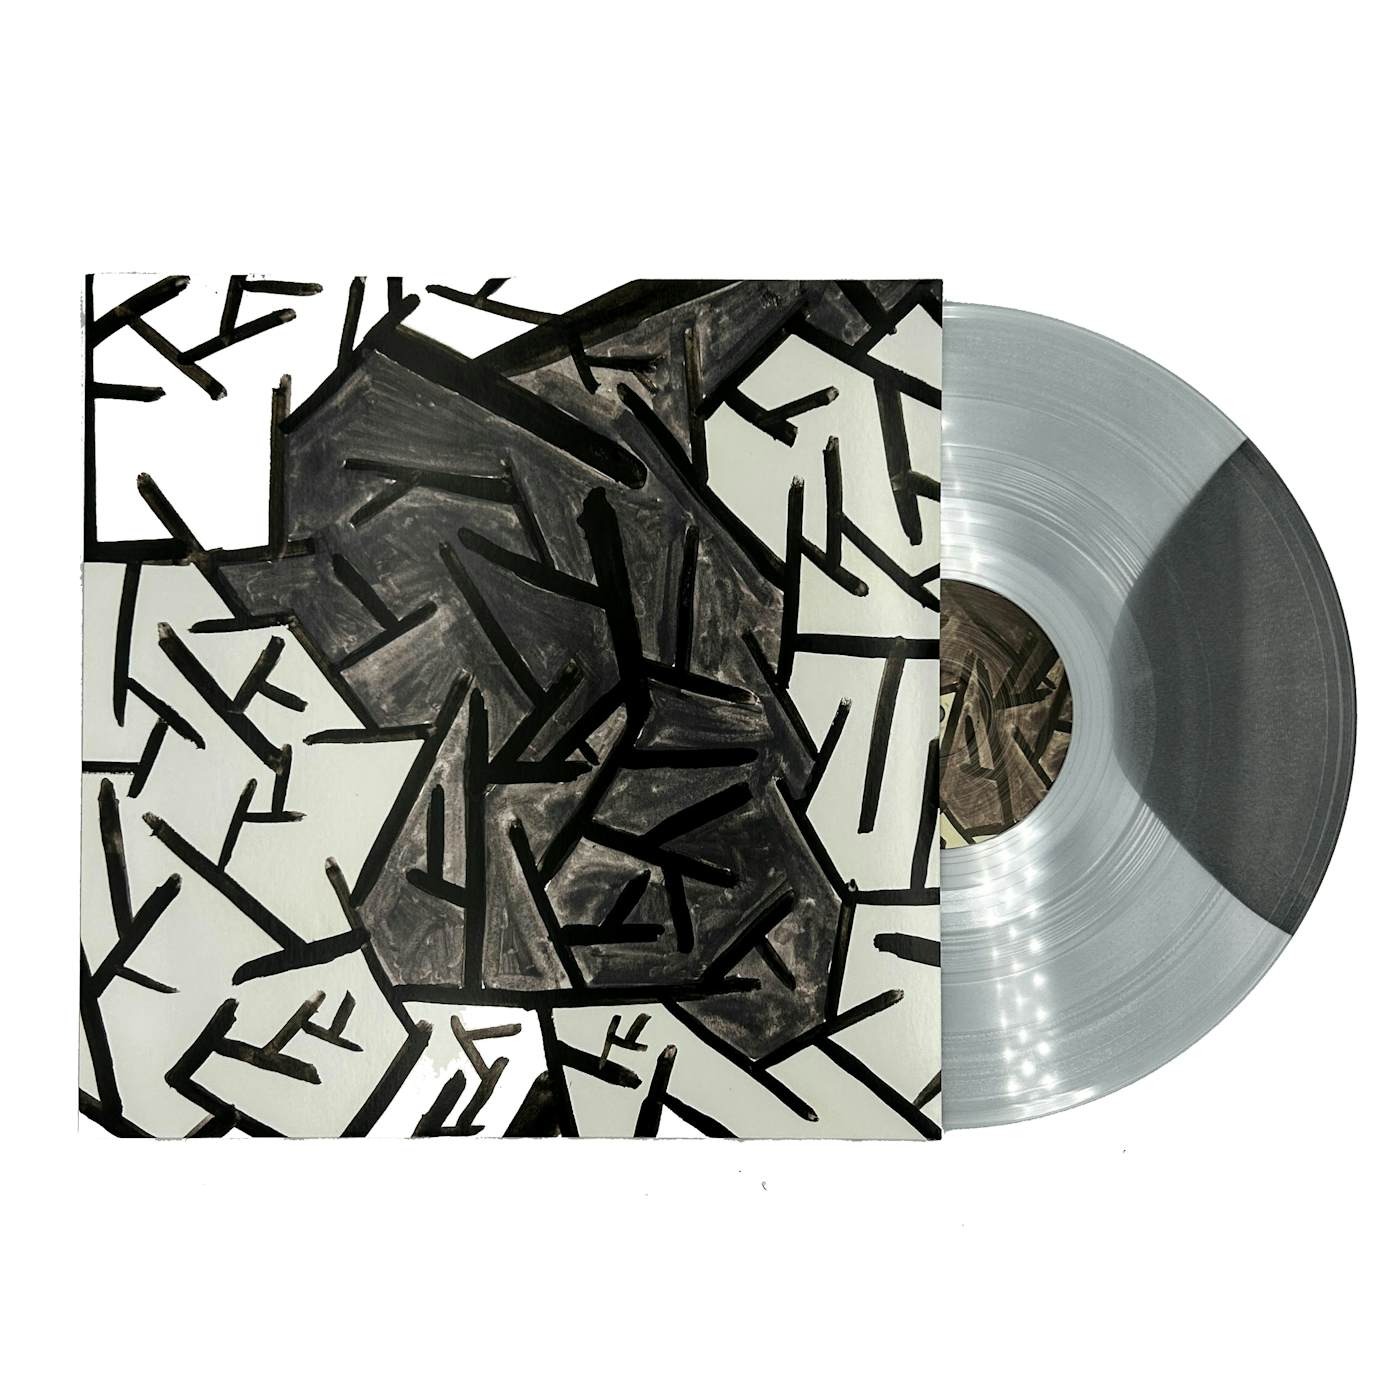 slayyyter vinyl - Music